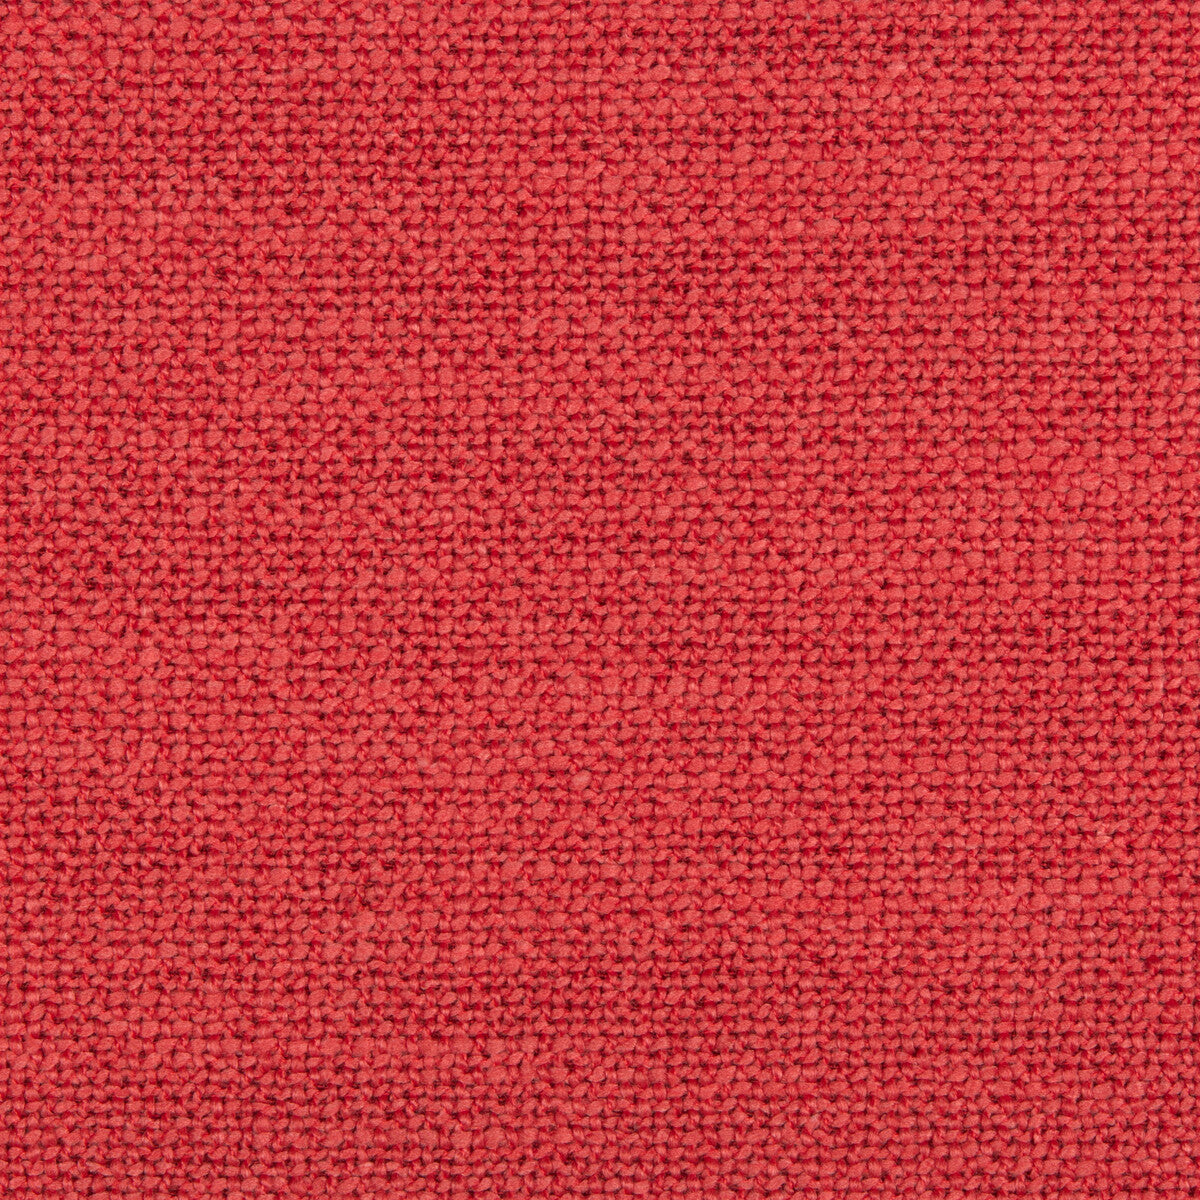 Kravet Smart fabric in 35379-712 color - pattern 35379.712.0 - by Kravet Smart in the Performance Kravetarmor collection